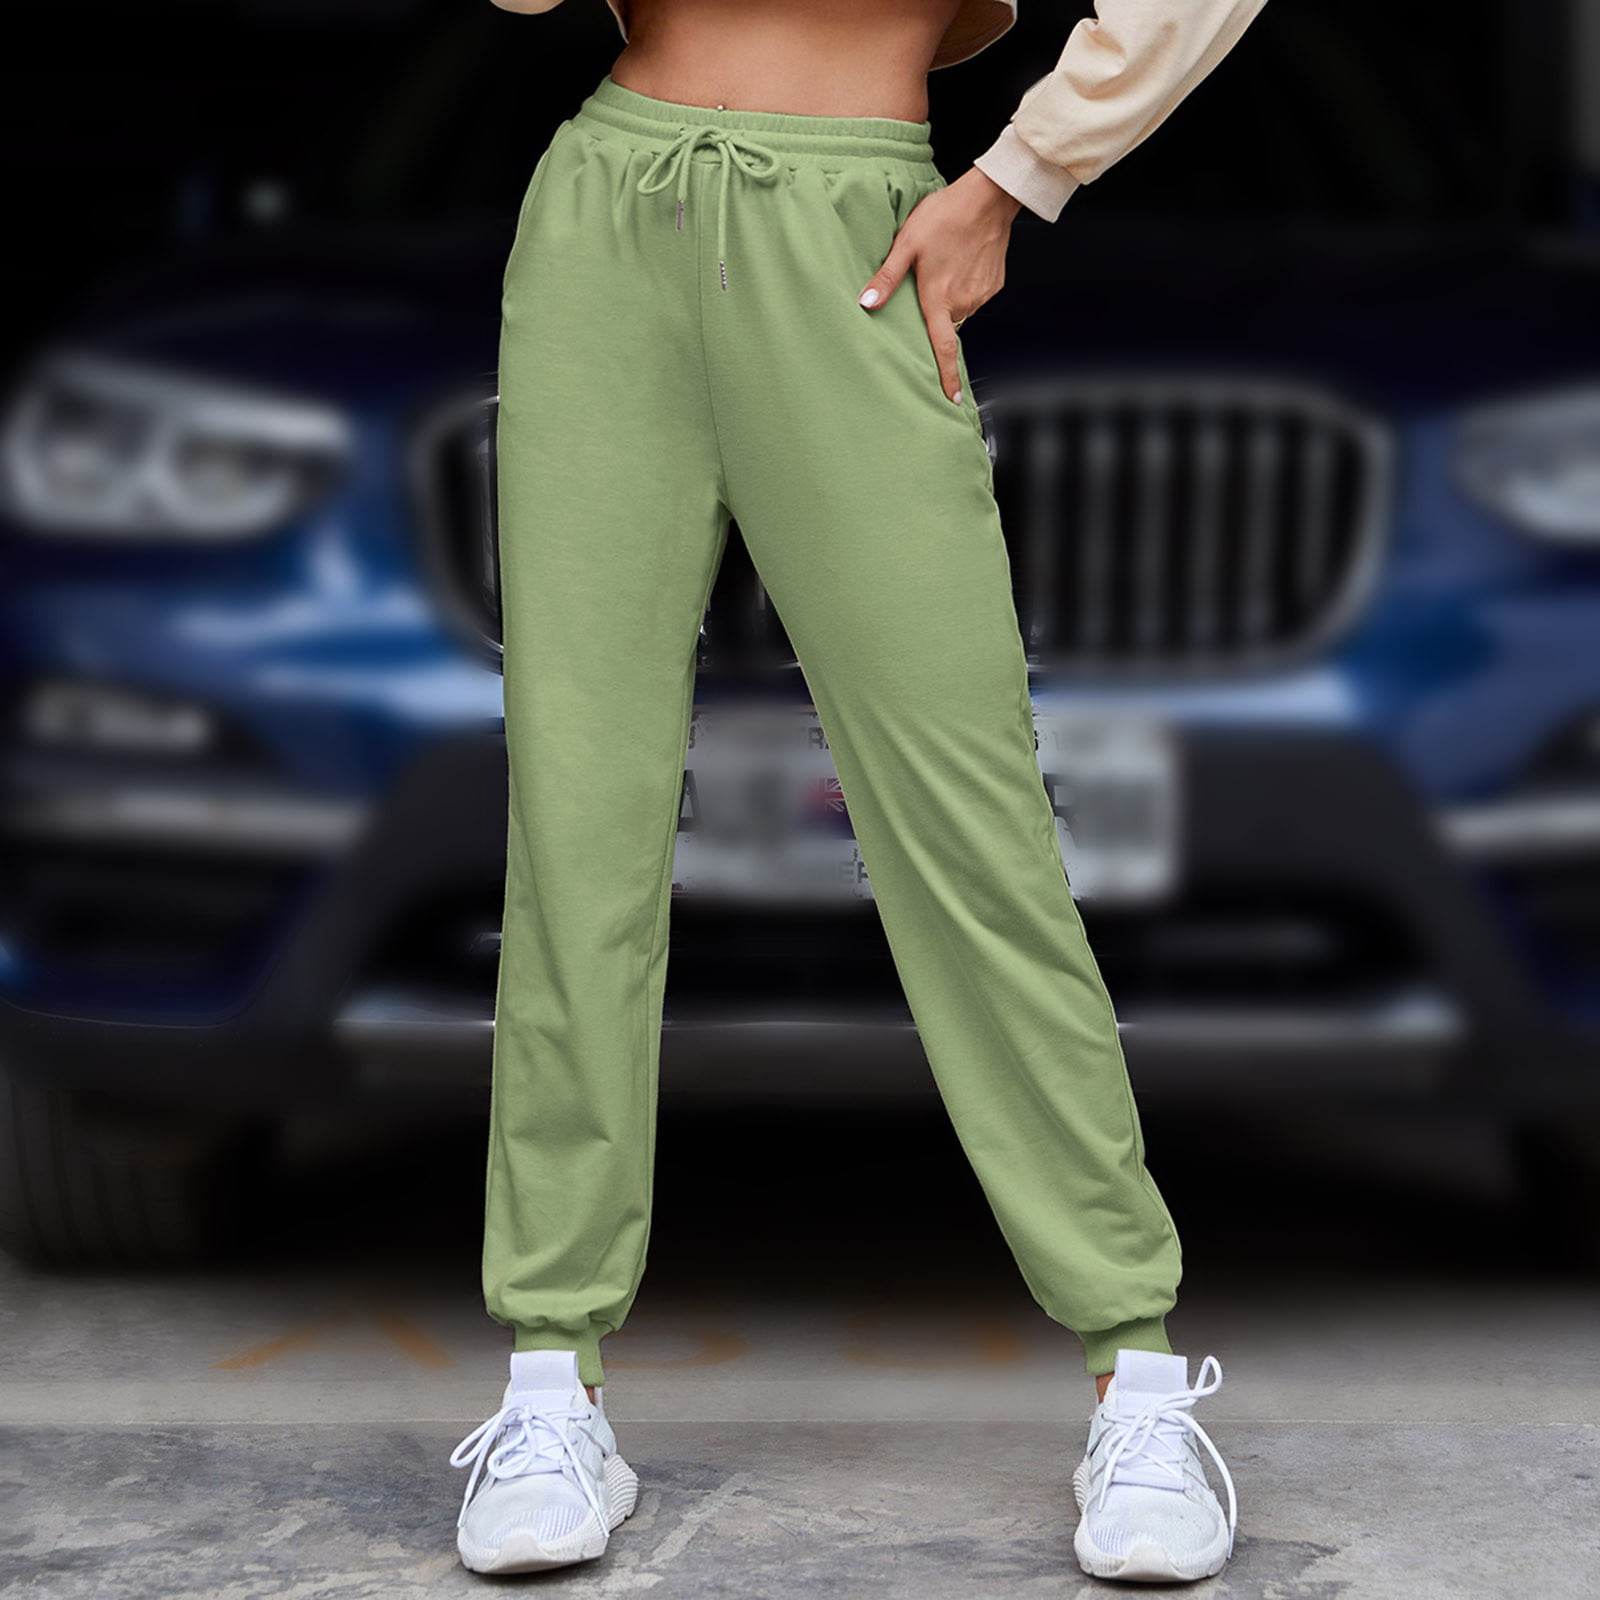 Pxiakgy pants for women Women's Soft Lightweight Skinny Solid Soft Stretch  Pockets Sweatpants Green + S - Walmart.com